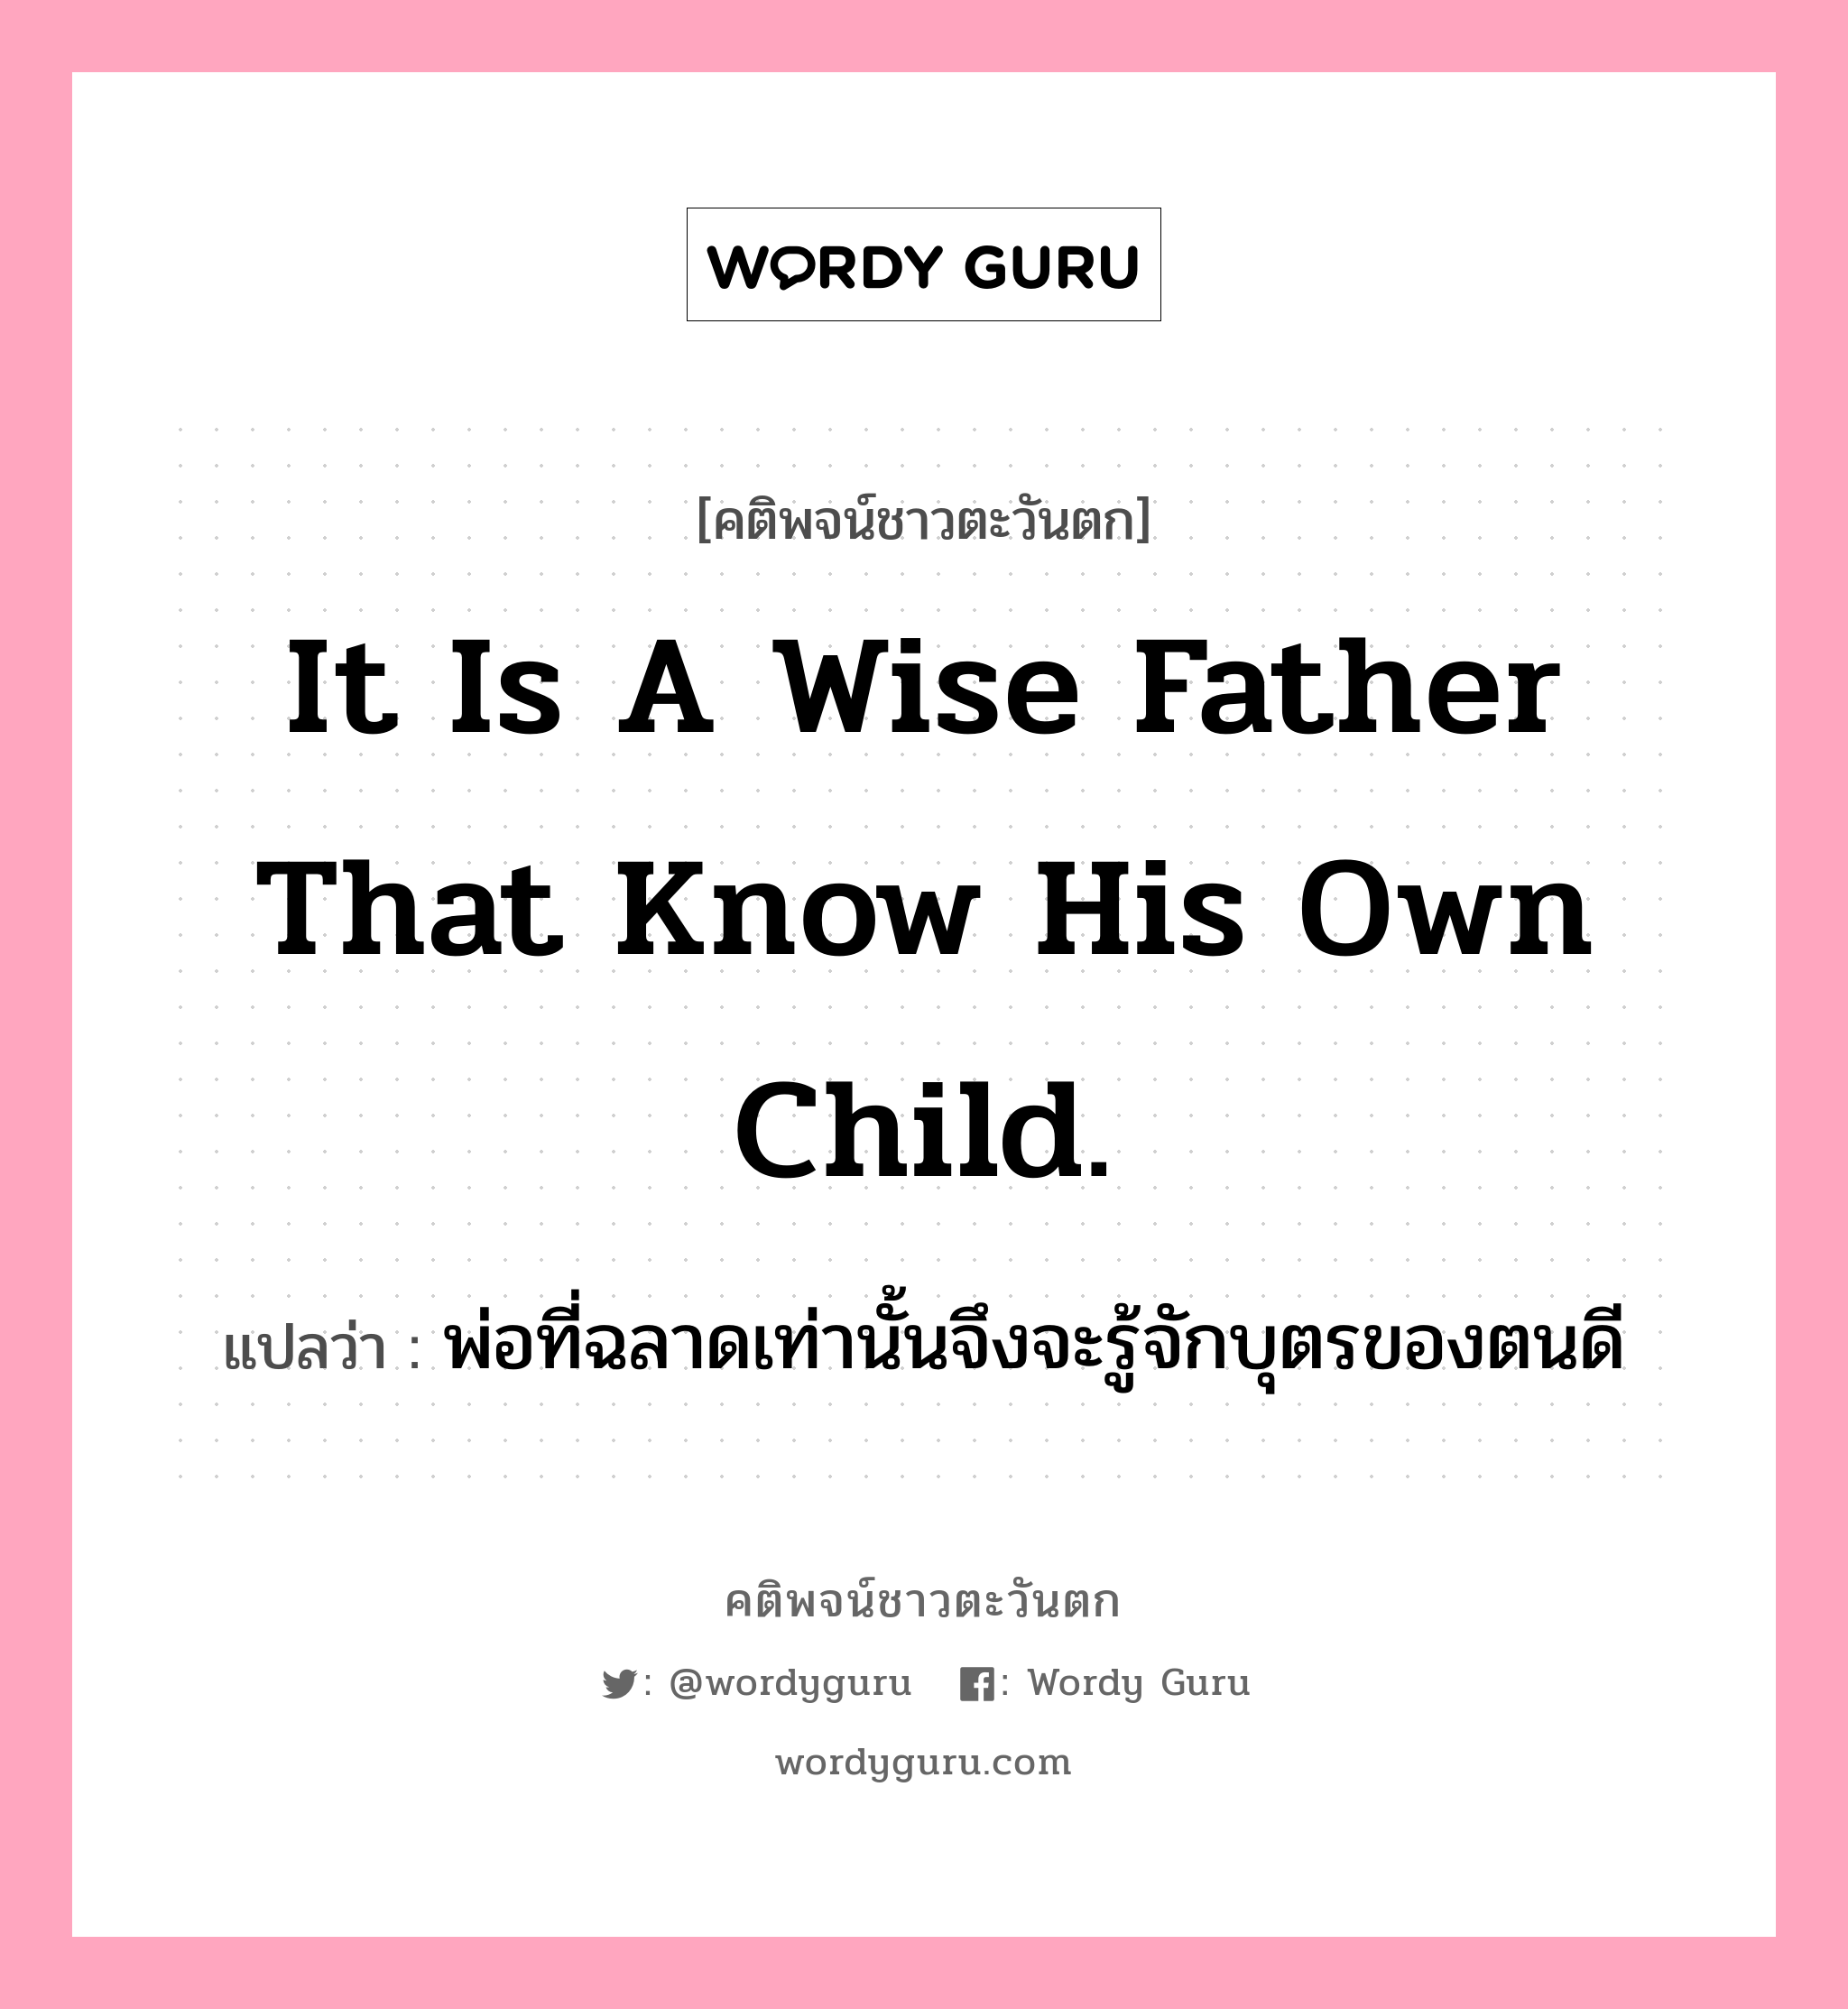 It is a wise father that know his own child., คติพจน์ชาวตะวันตก It is a wise father that know his own child. แปลว่า พ่อที่ฉลาดเท่านั้นจึงจะรู้จักบุตรของตนดี